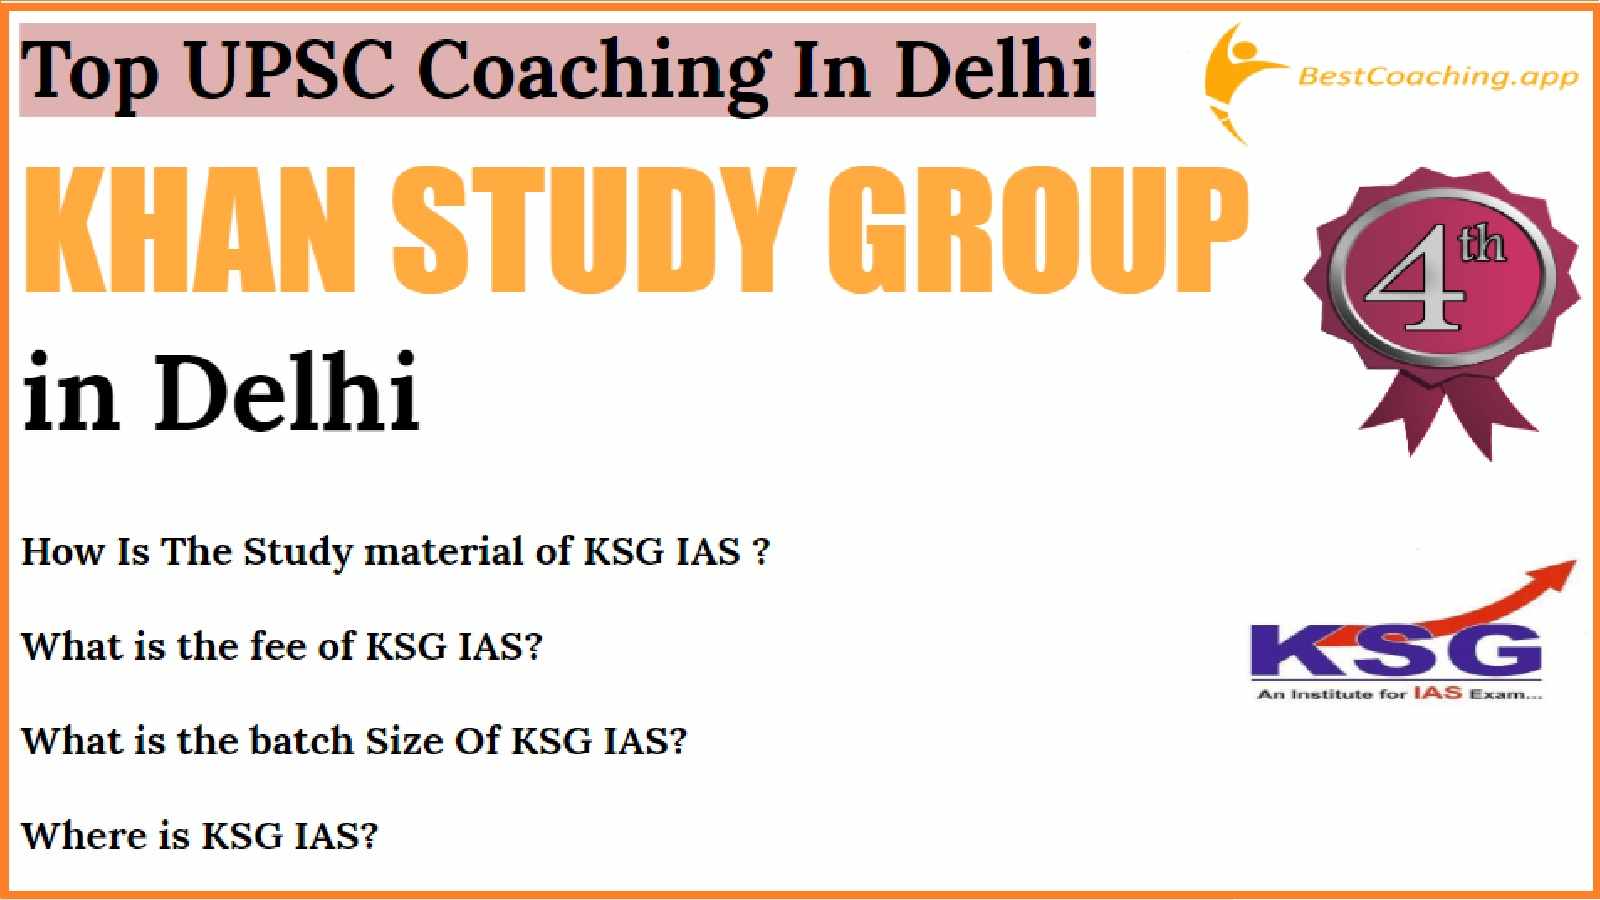 Top UPSC Coaching Centers In Delhi BestCoaching.app